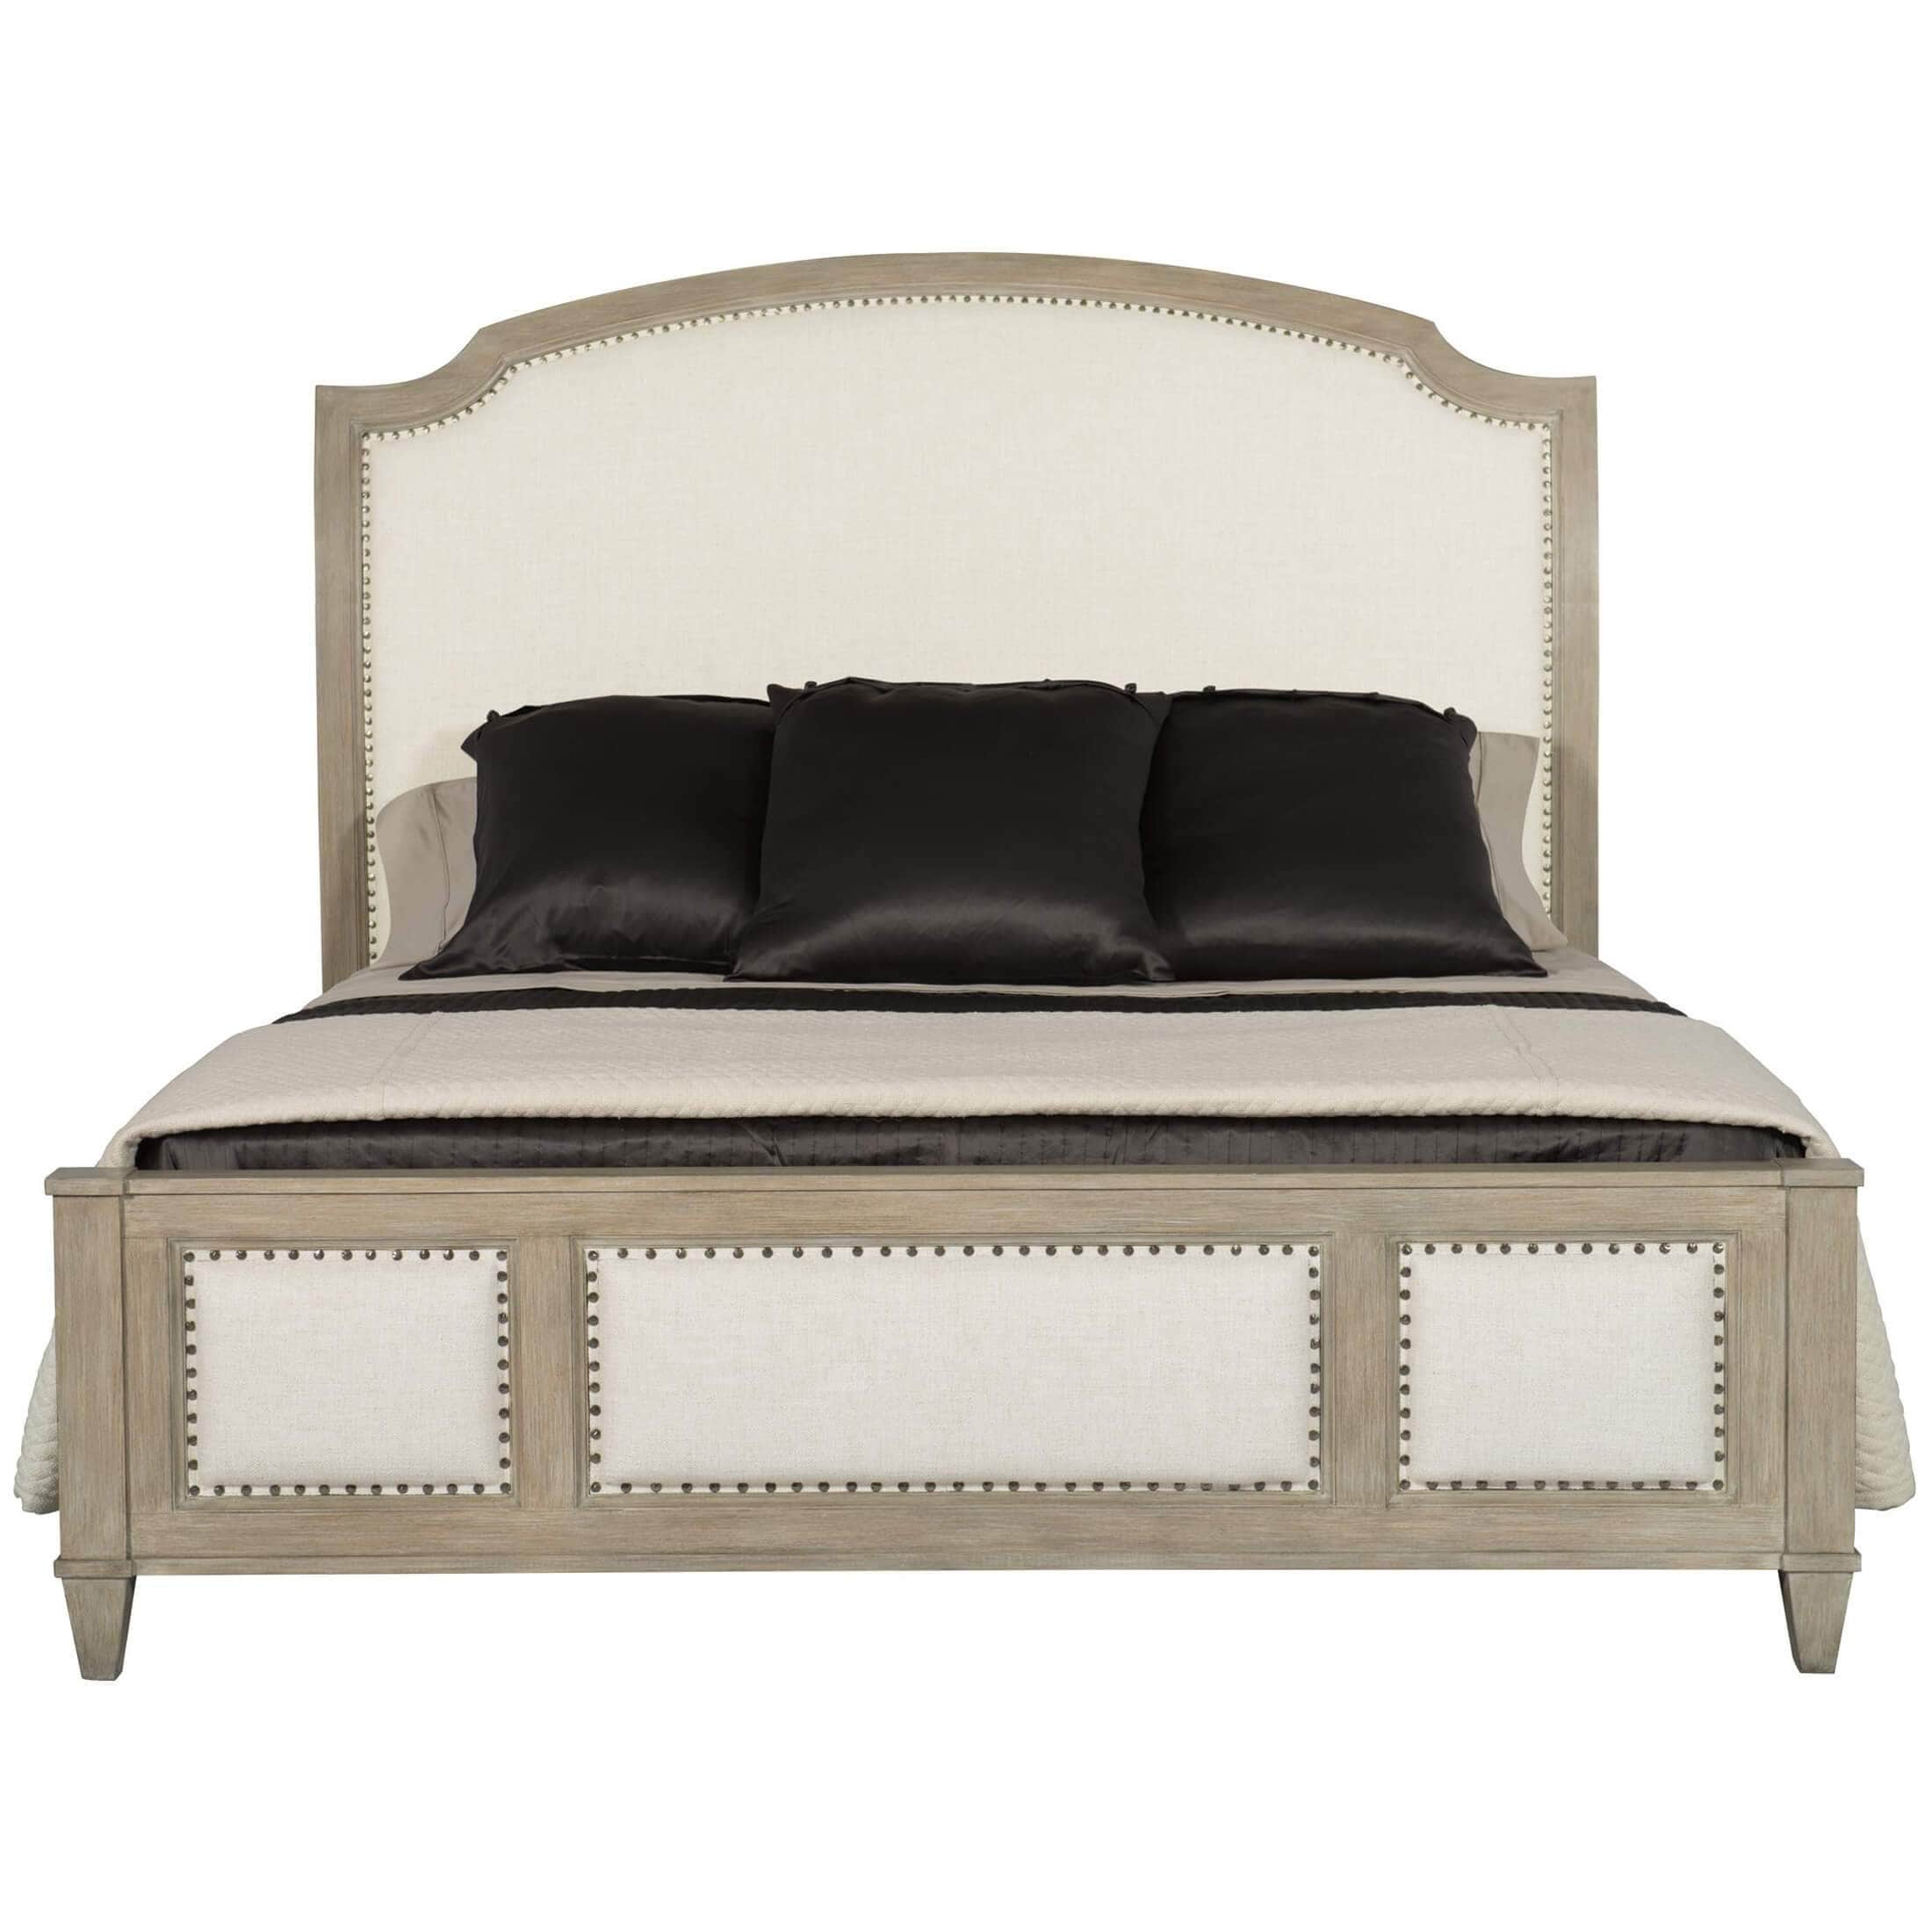 Image of Santa Barbara Upholstered Sleigh Bed